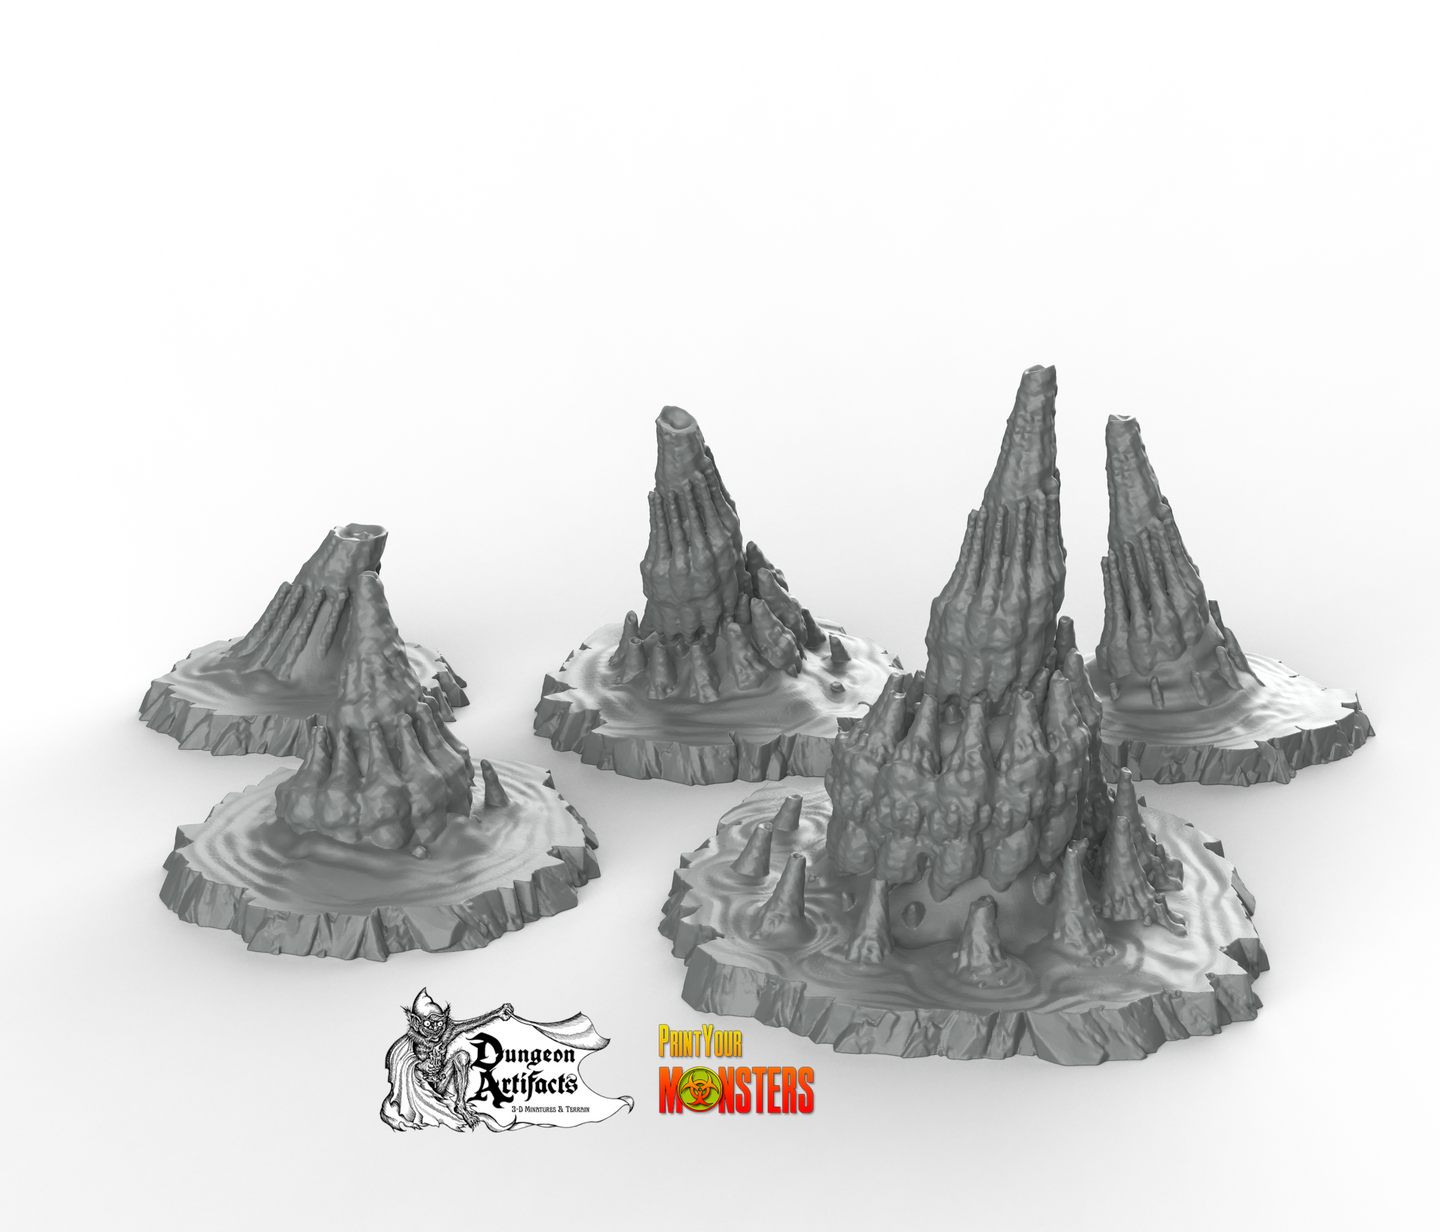 Buried Elder Things Dwellings - Fantastic Plants and Rocks Vol. 2 - Print Your Monsters - Wargaming D&D DnD